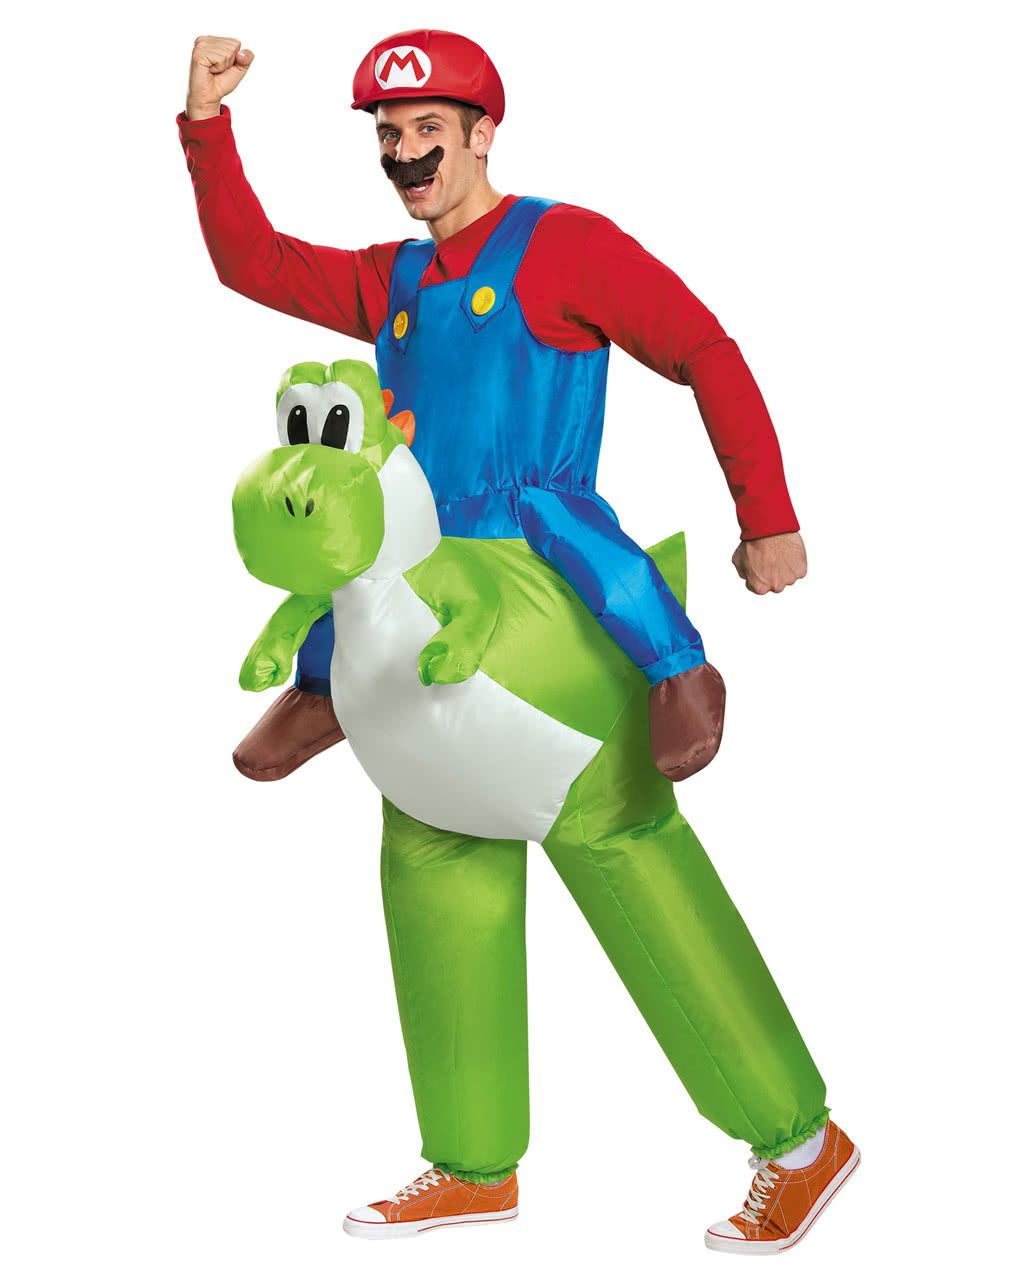 Super Mario amp Yoshi Kost 252 m Videospiel Kost 252 m Karneval Universe